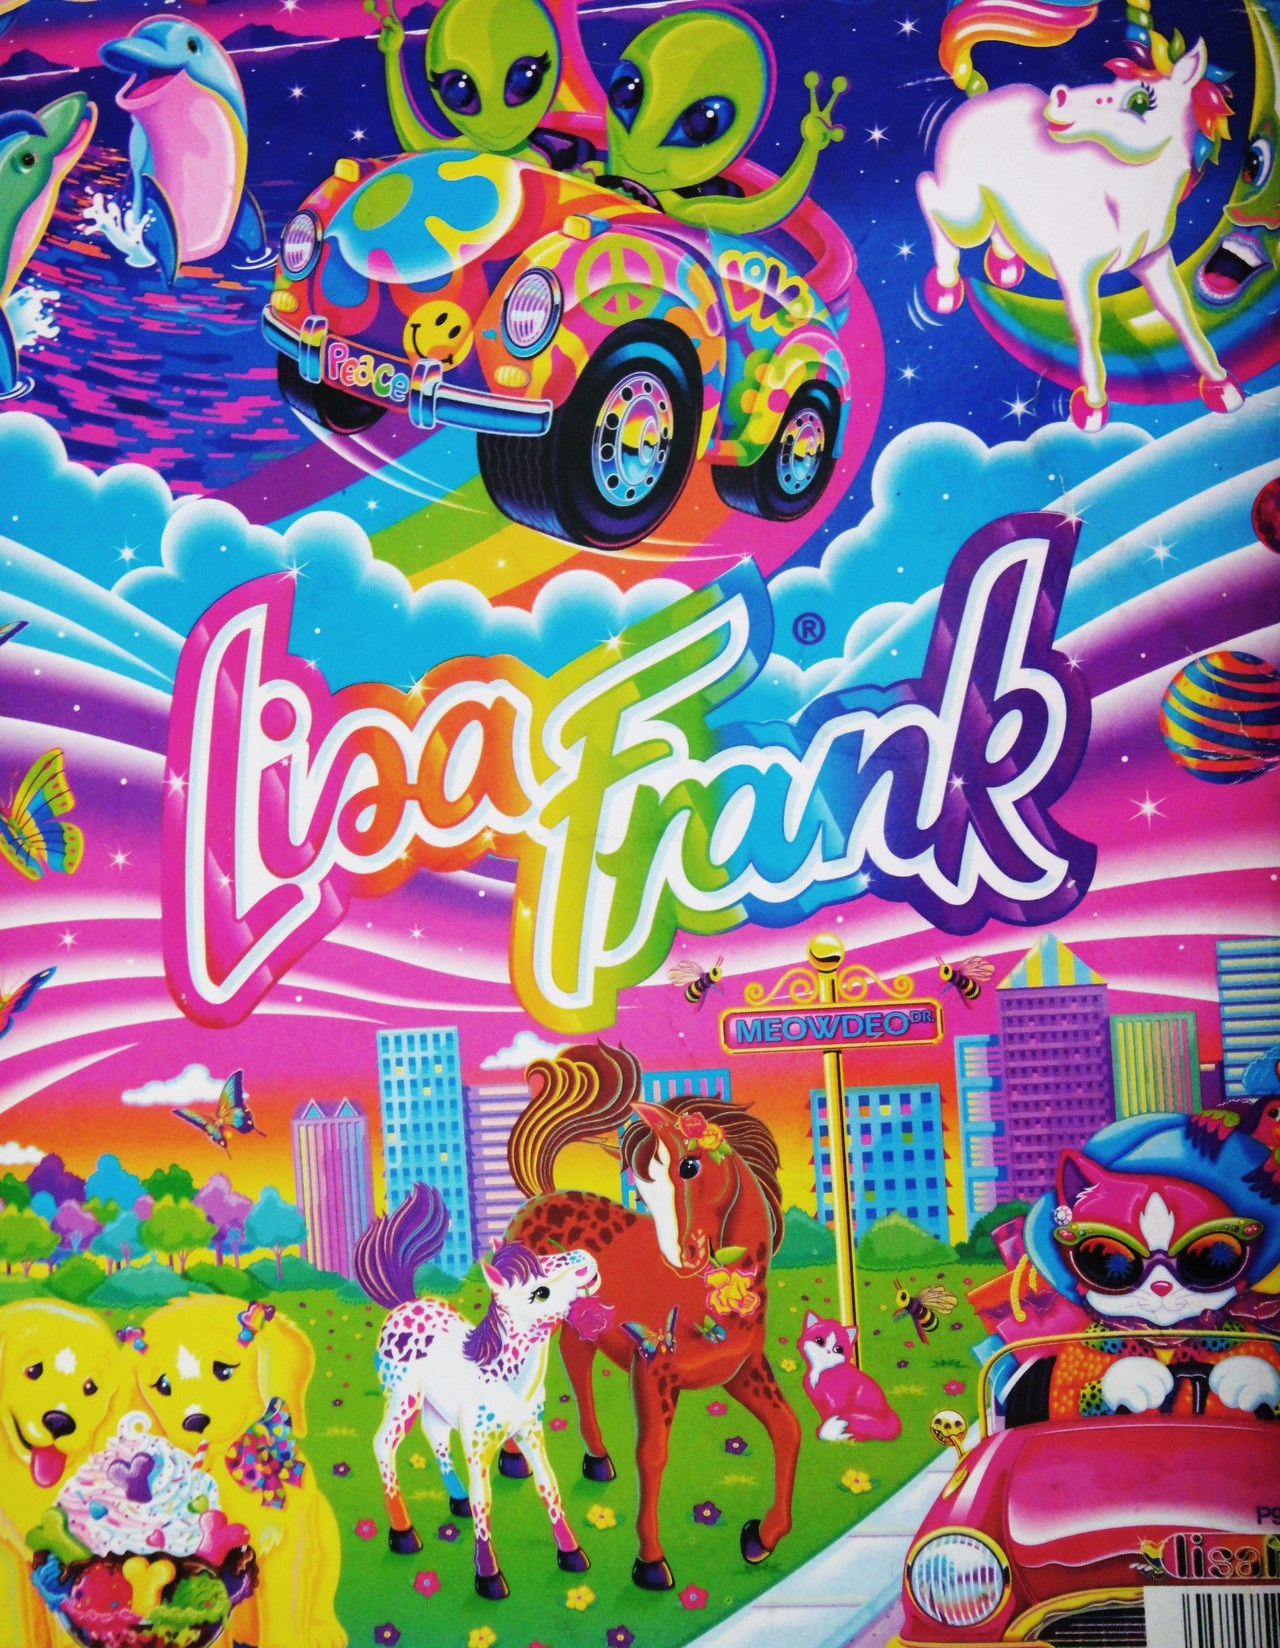 Wallpapers Lisa Frank Logo 601497.6 1280x1648 | #601498 #lisa frank